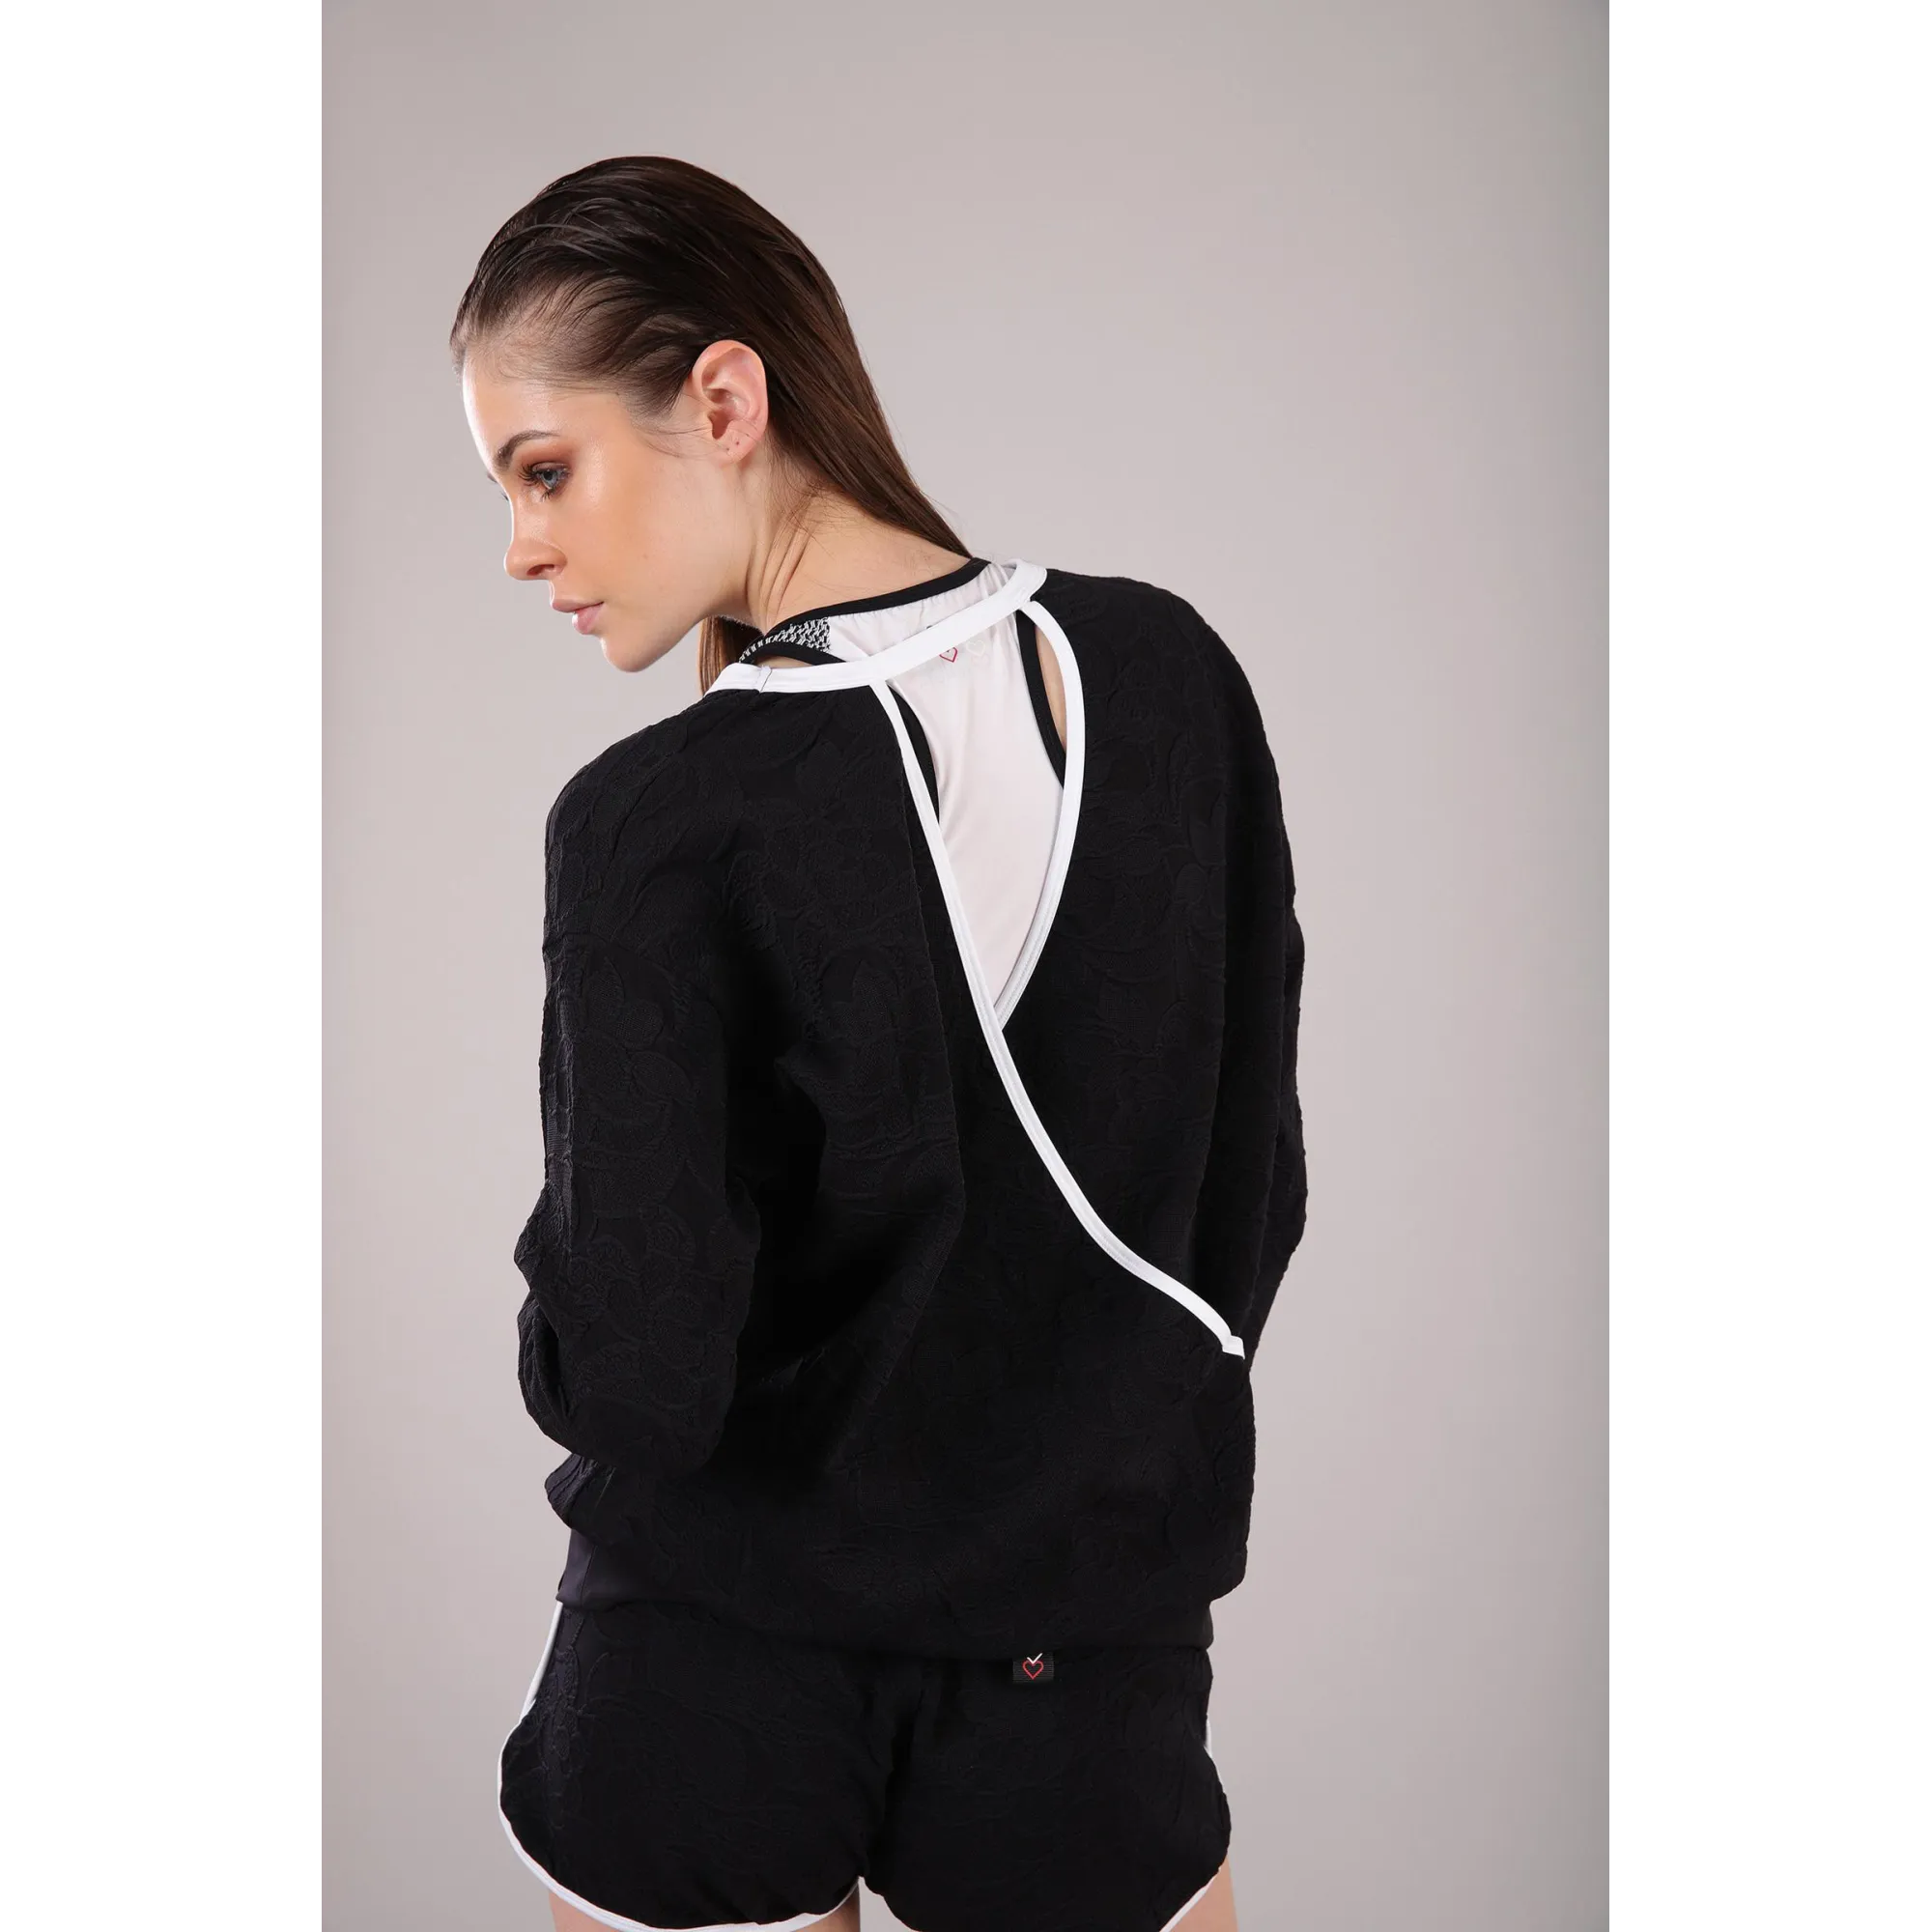 Yoga Jacquard-Shirt - V-Ausschnitt am Rücken - Made in Italy - Black - White - NW0